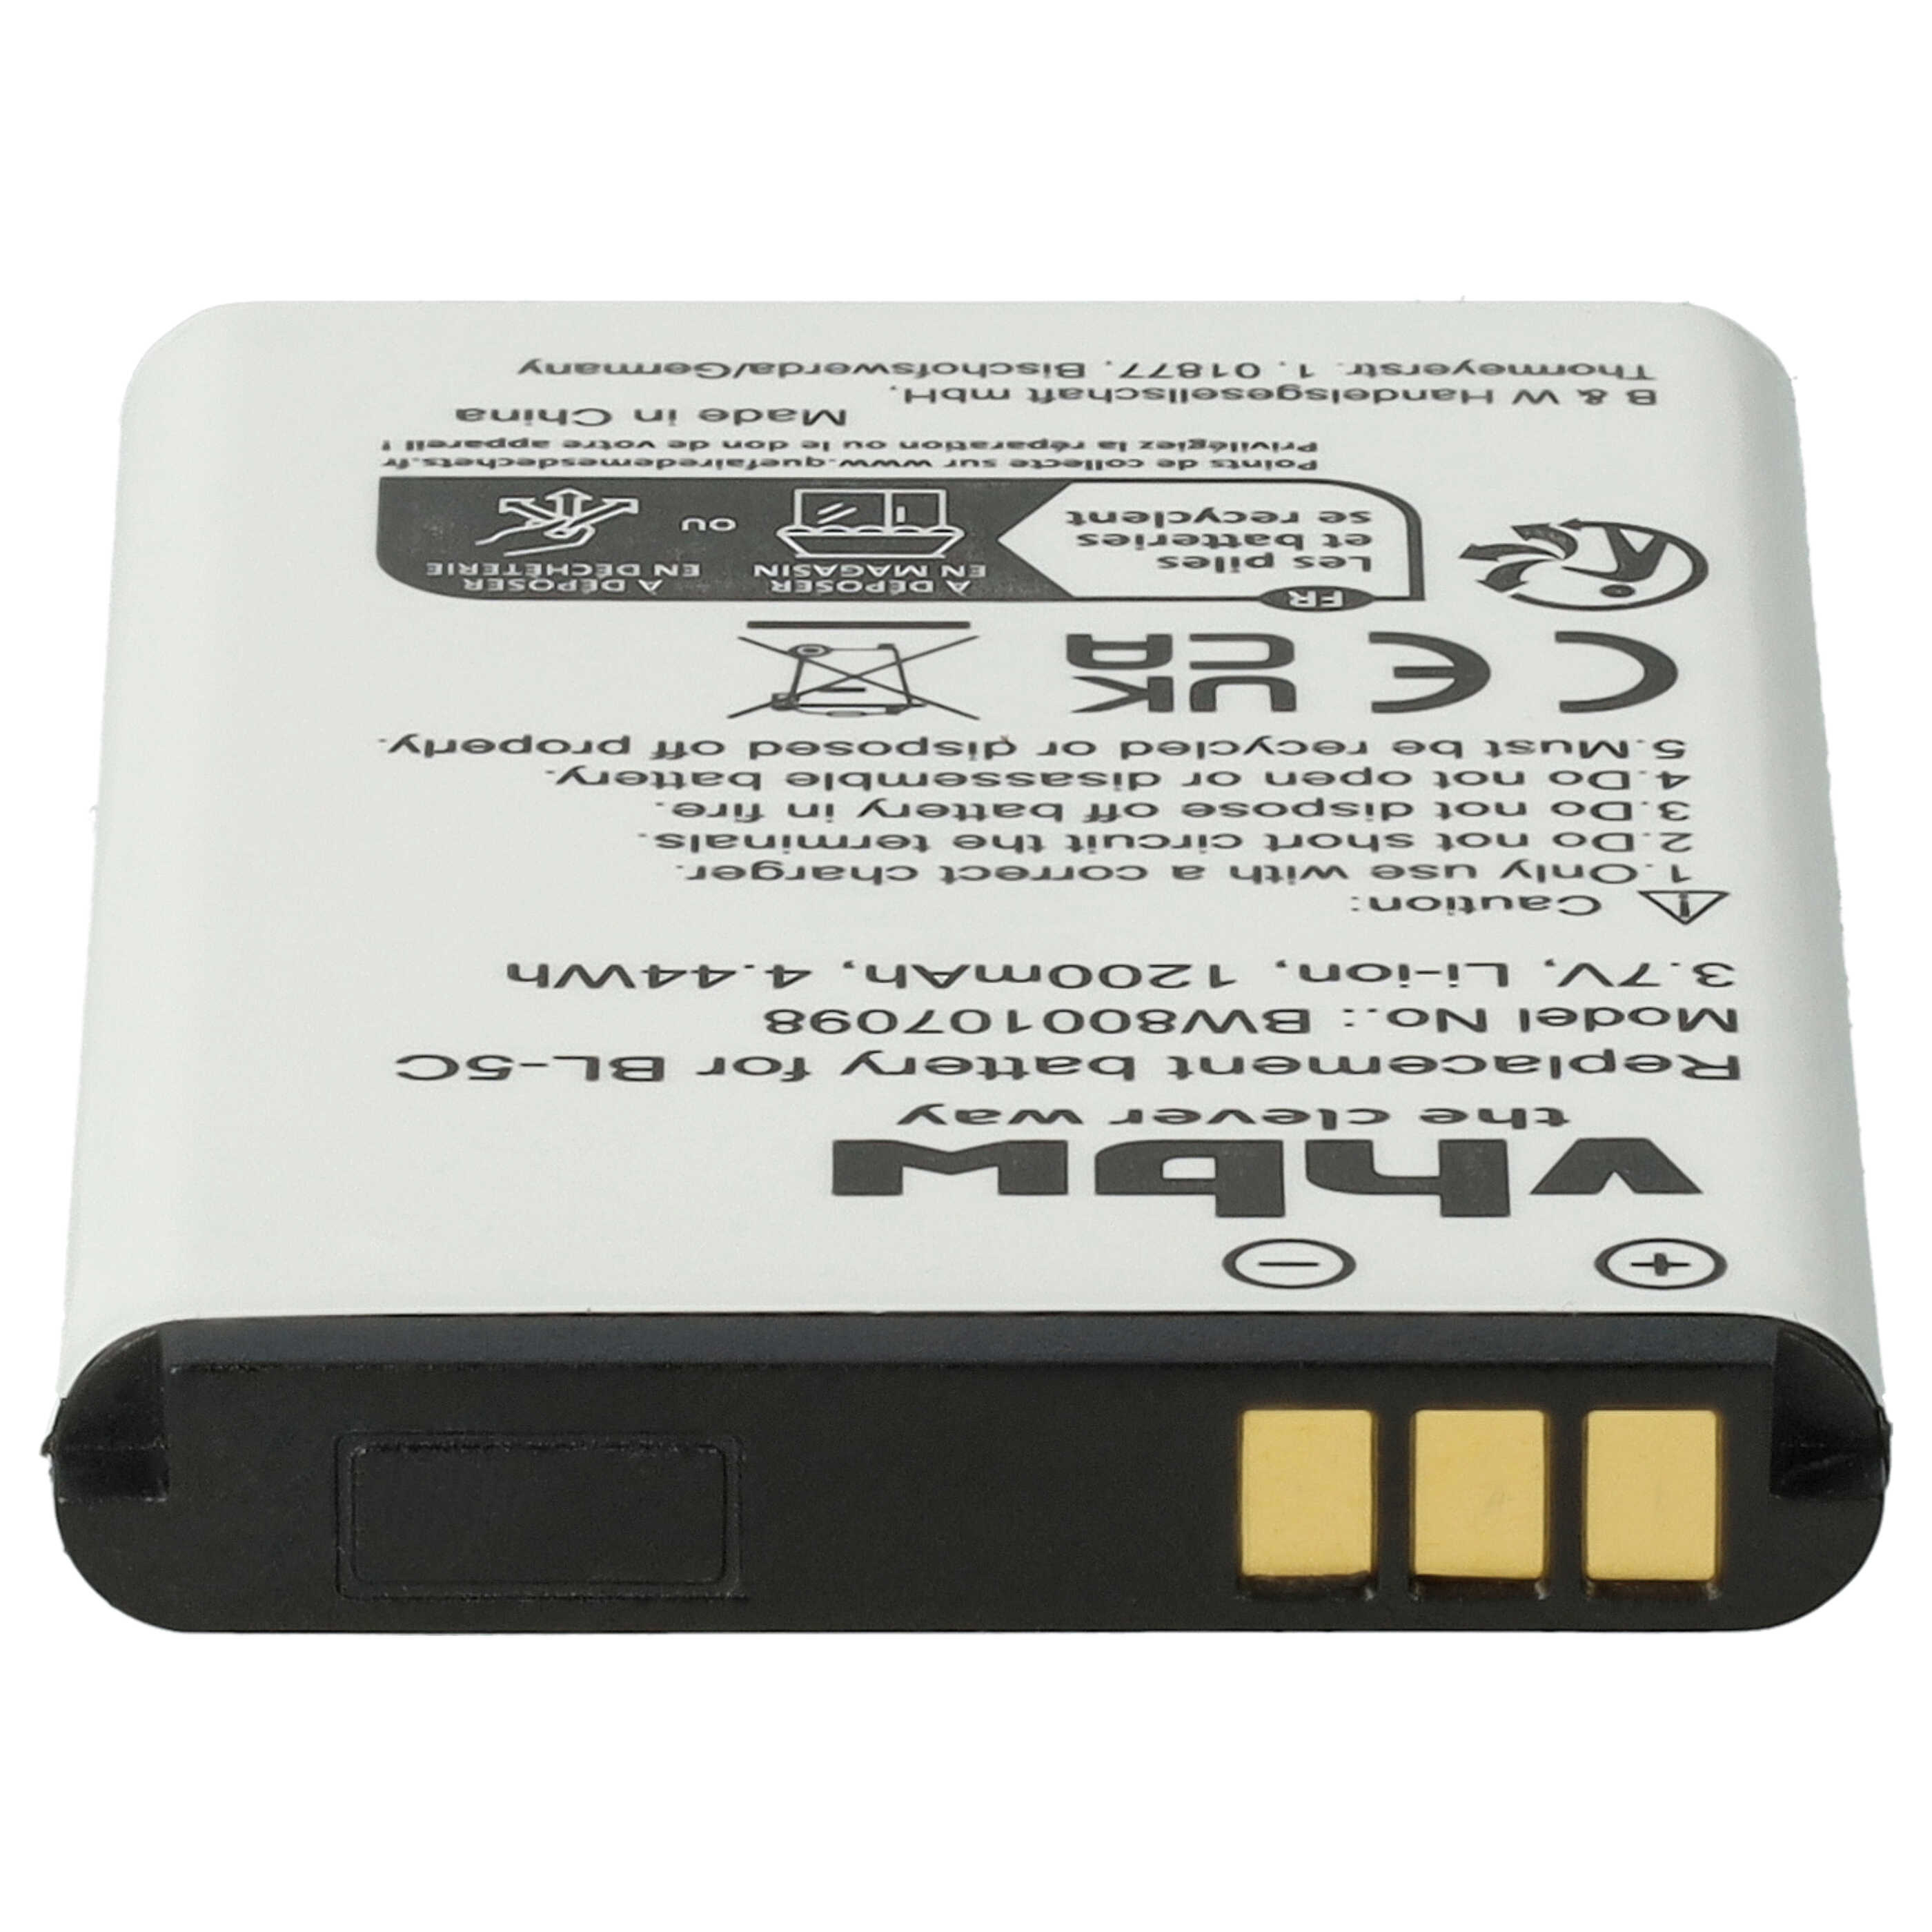 Batería reemplaza MP-S-A1, RCB215, BS-16 para móvil, teléfono Manta - 1200 mAh 3,7 V Li-Ion